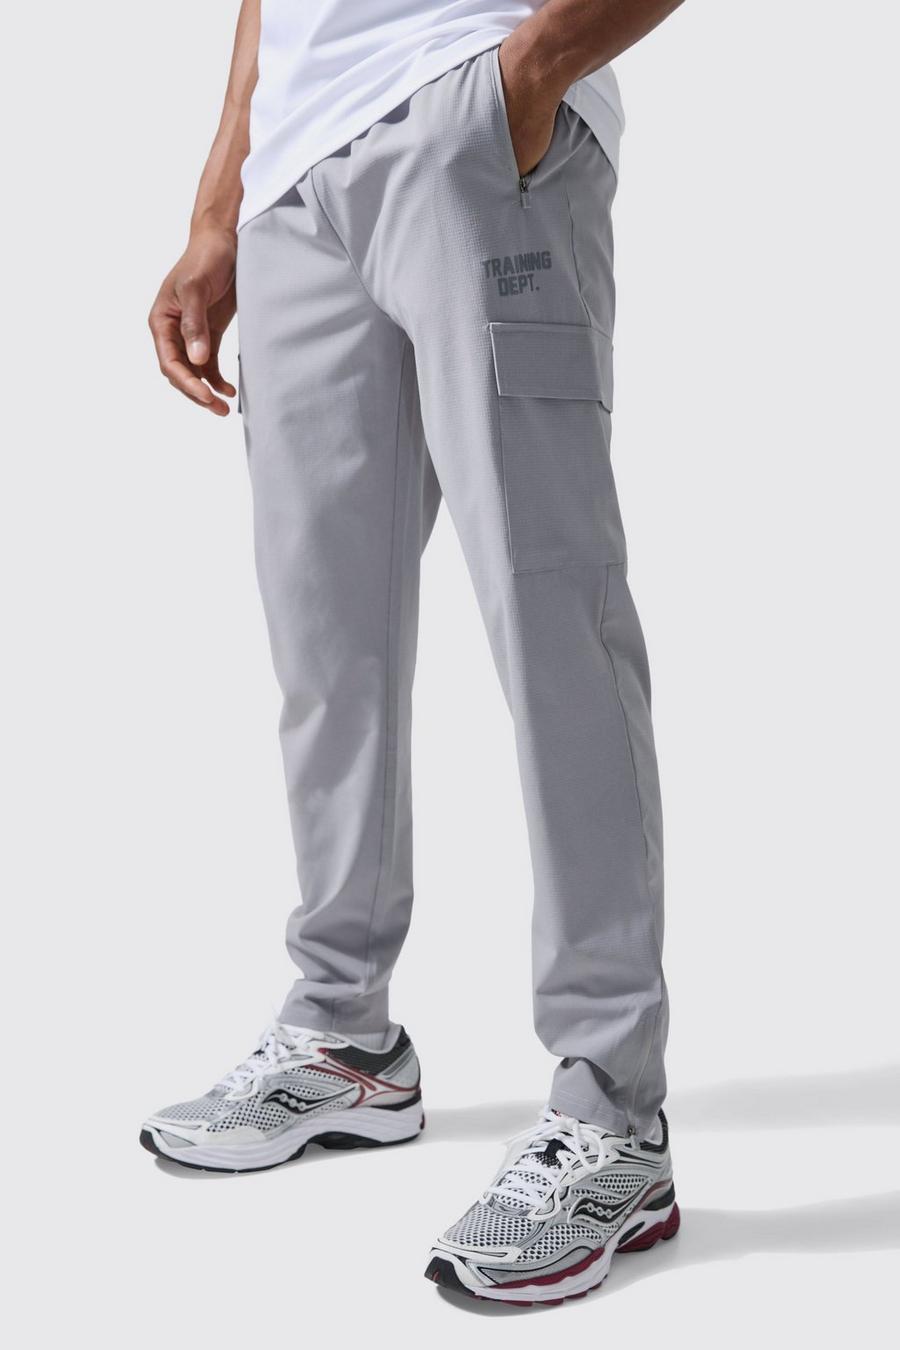 Pantalón deportivo Active cargo ajustado, Light grey image number 1